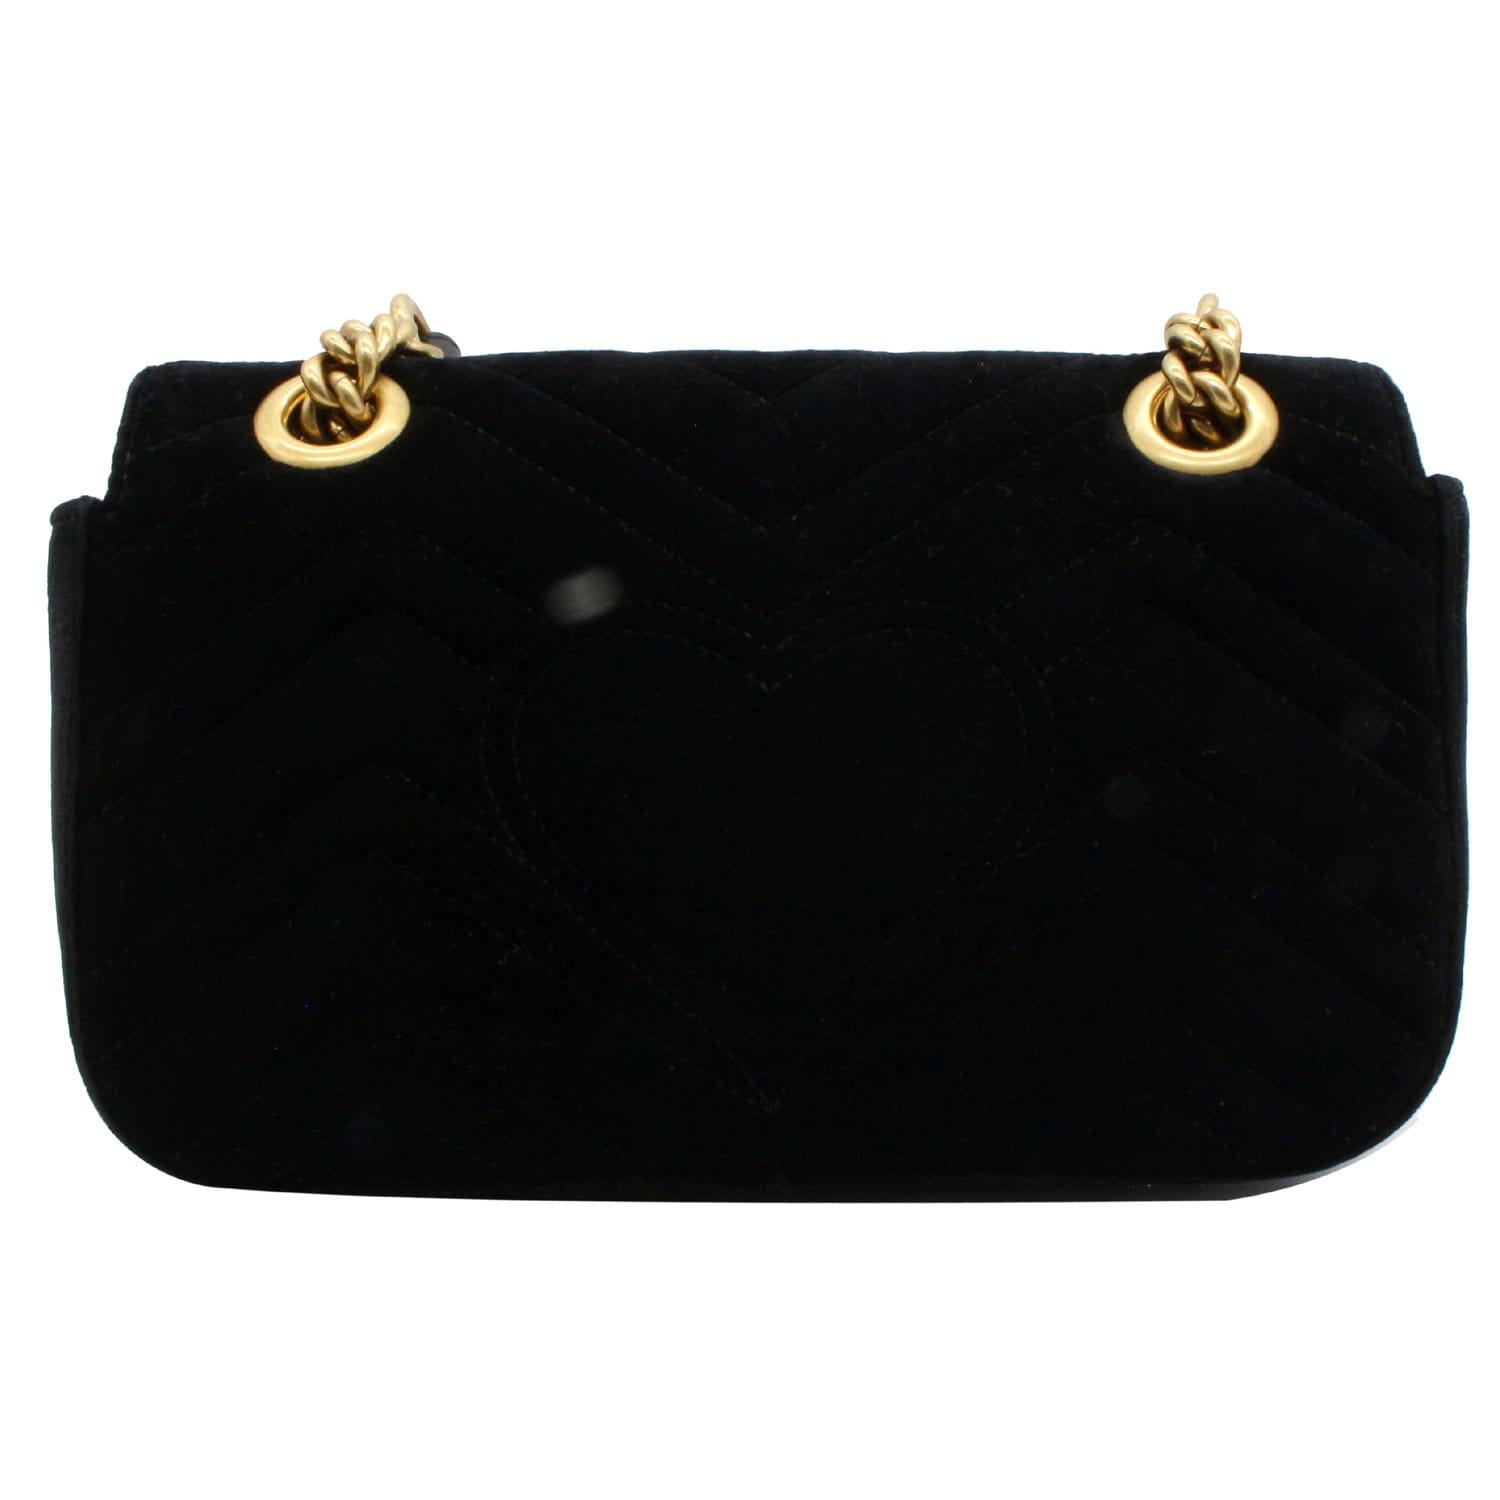 Gucci GG Marmont 2.0 Medium Quilted Shoulder Bag, Black